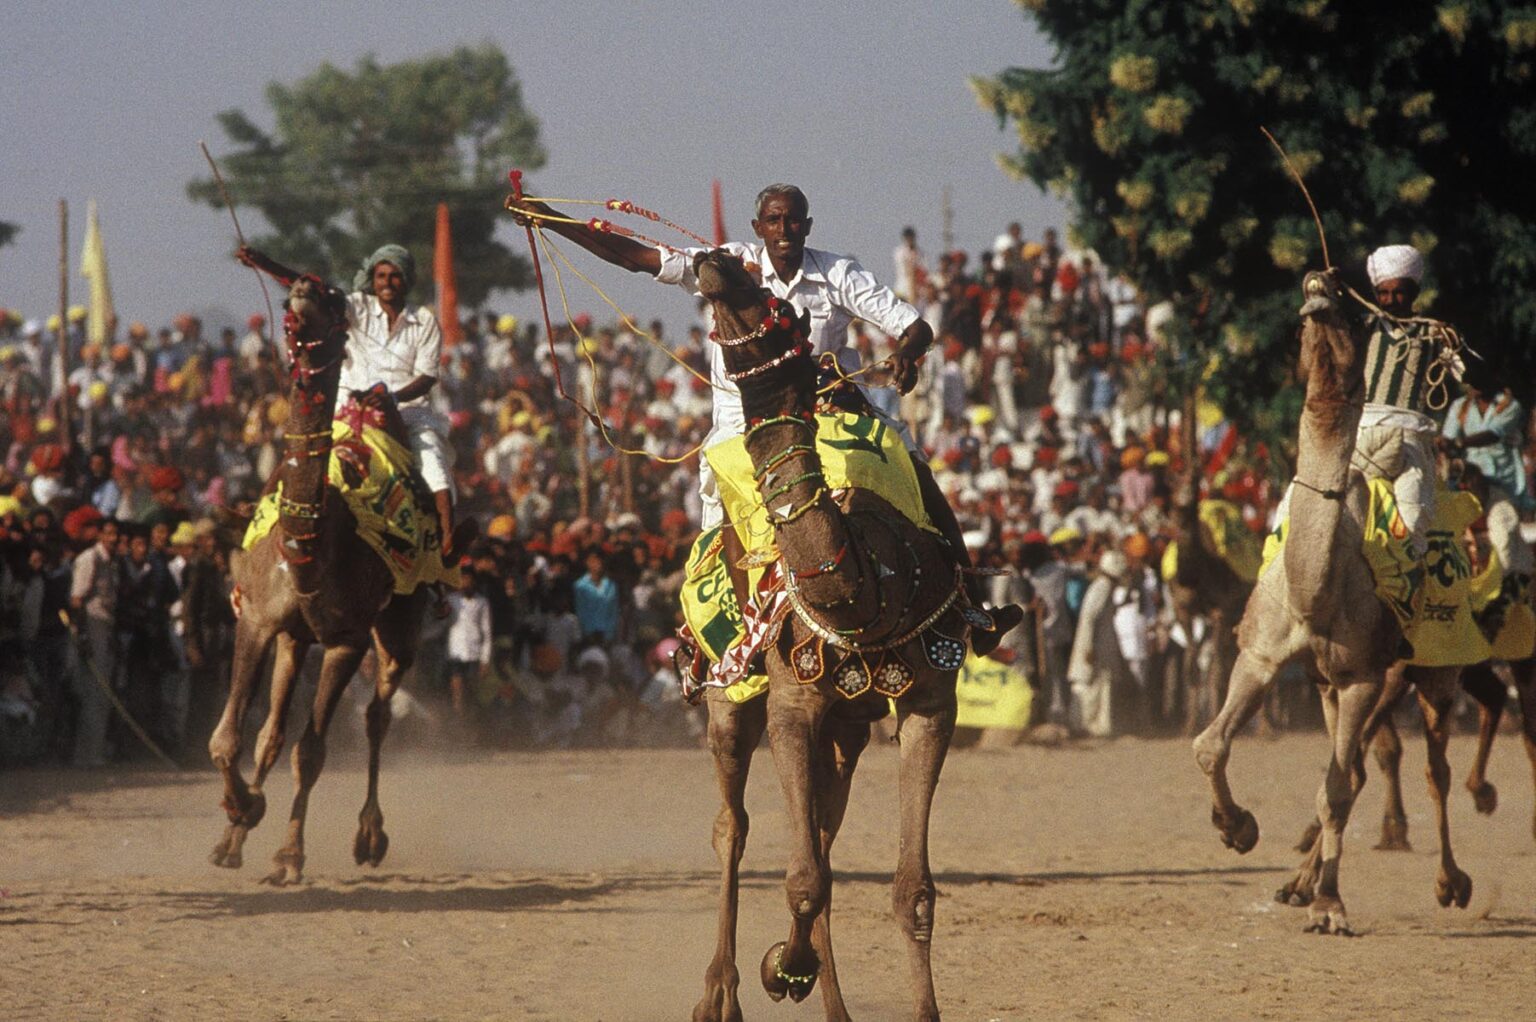 CAMEL RACES at the PUSHKAR CAMEL FAIR - RAJASTHAN, INDIA